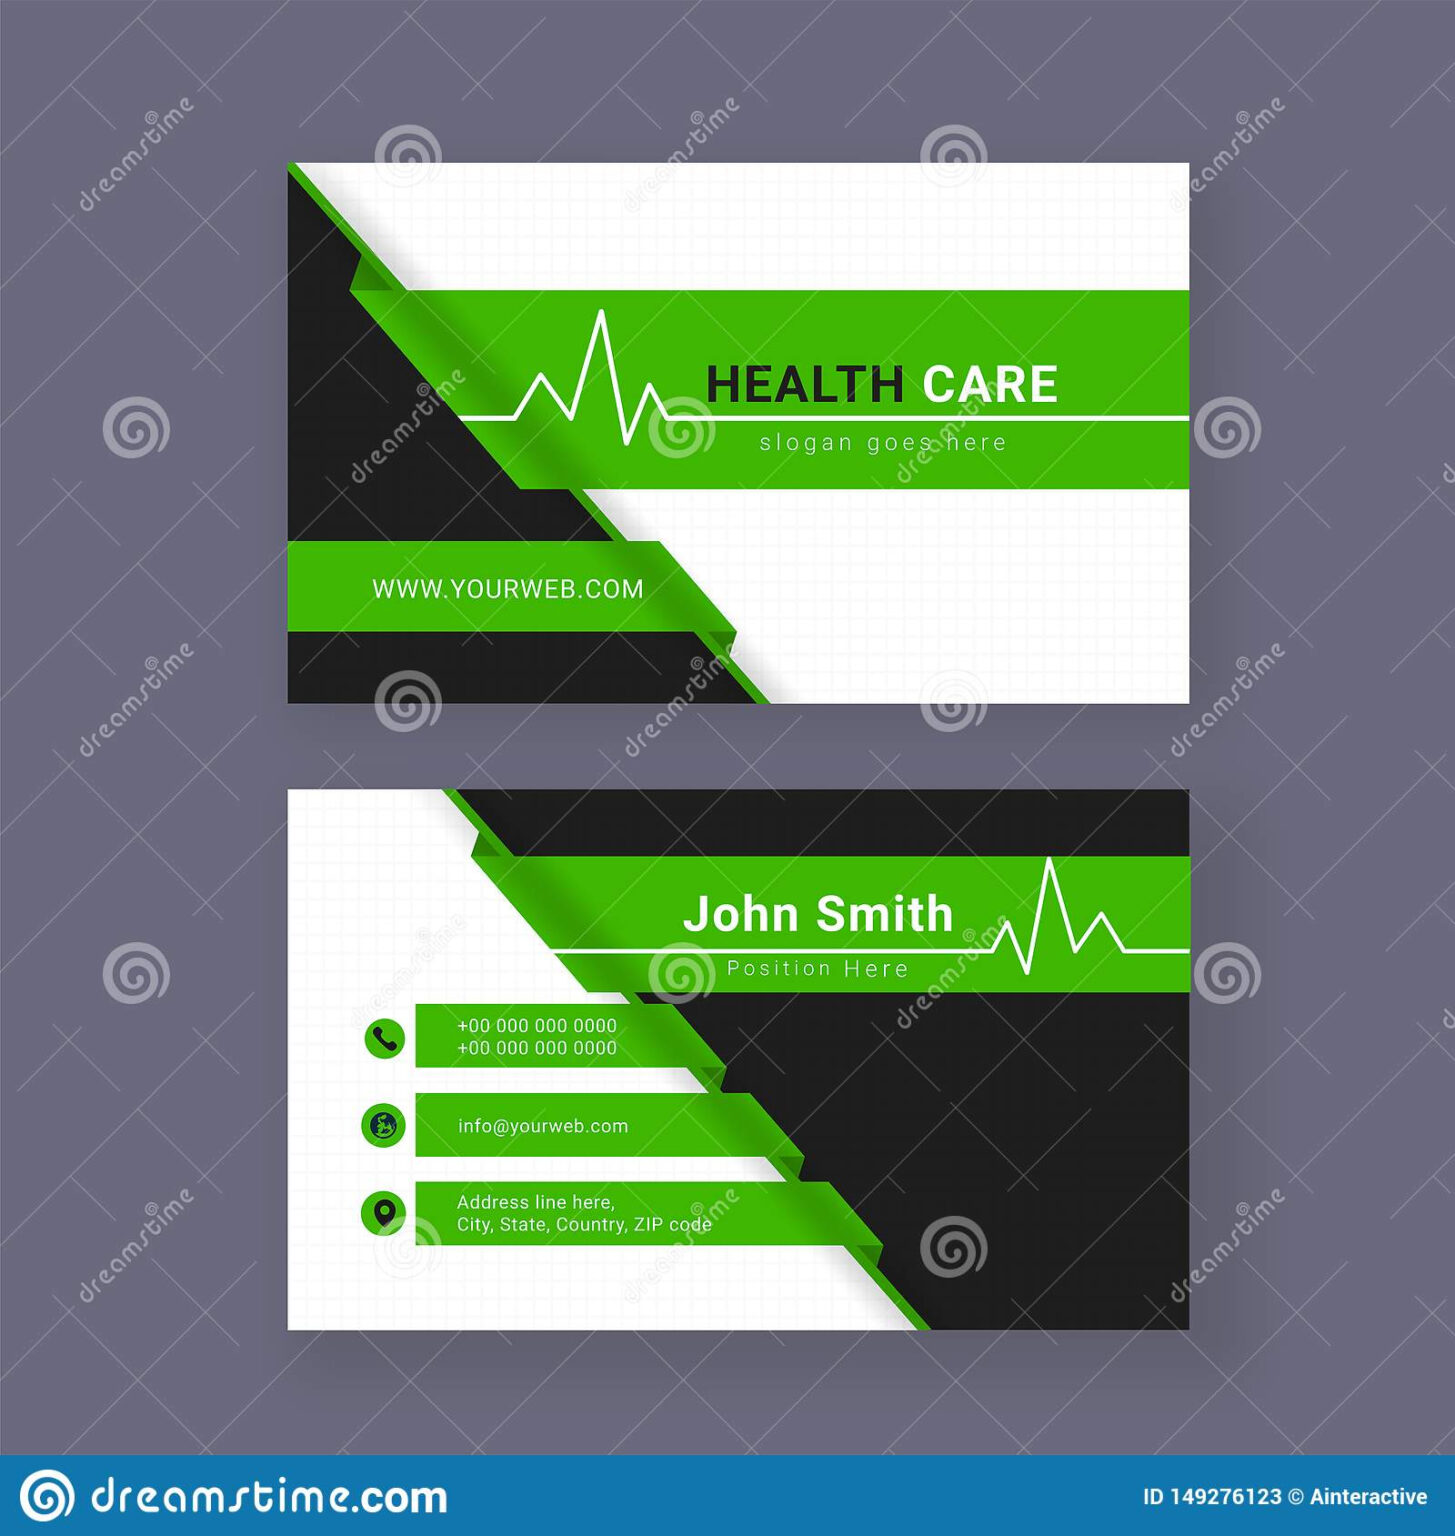 medical-business-card-or-visiting-card-stock-illustration-in-medical